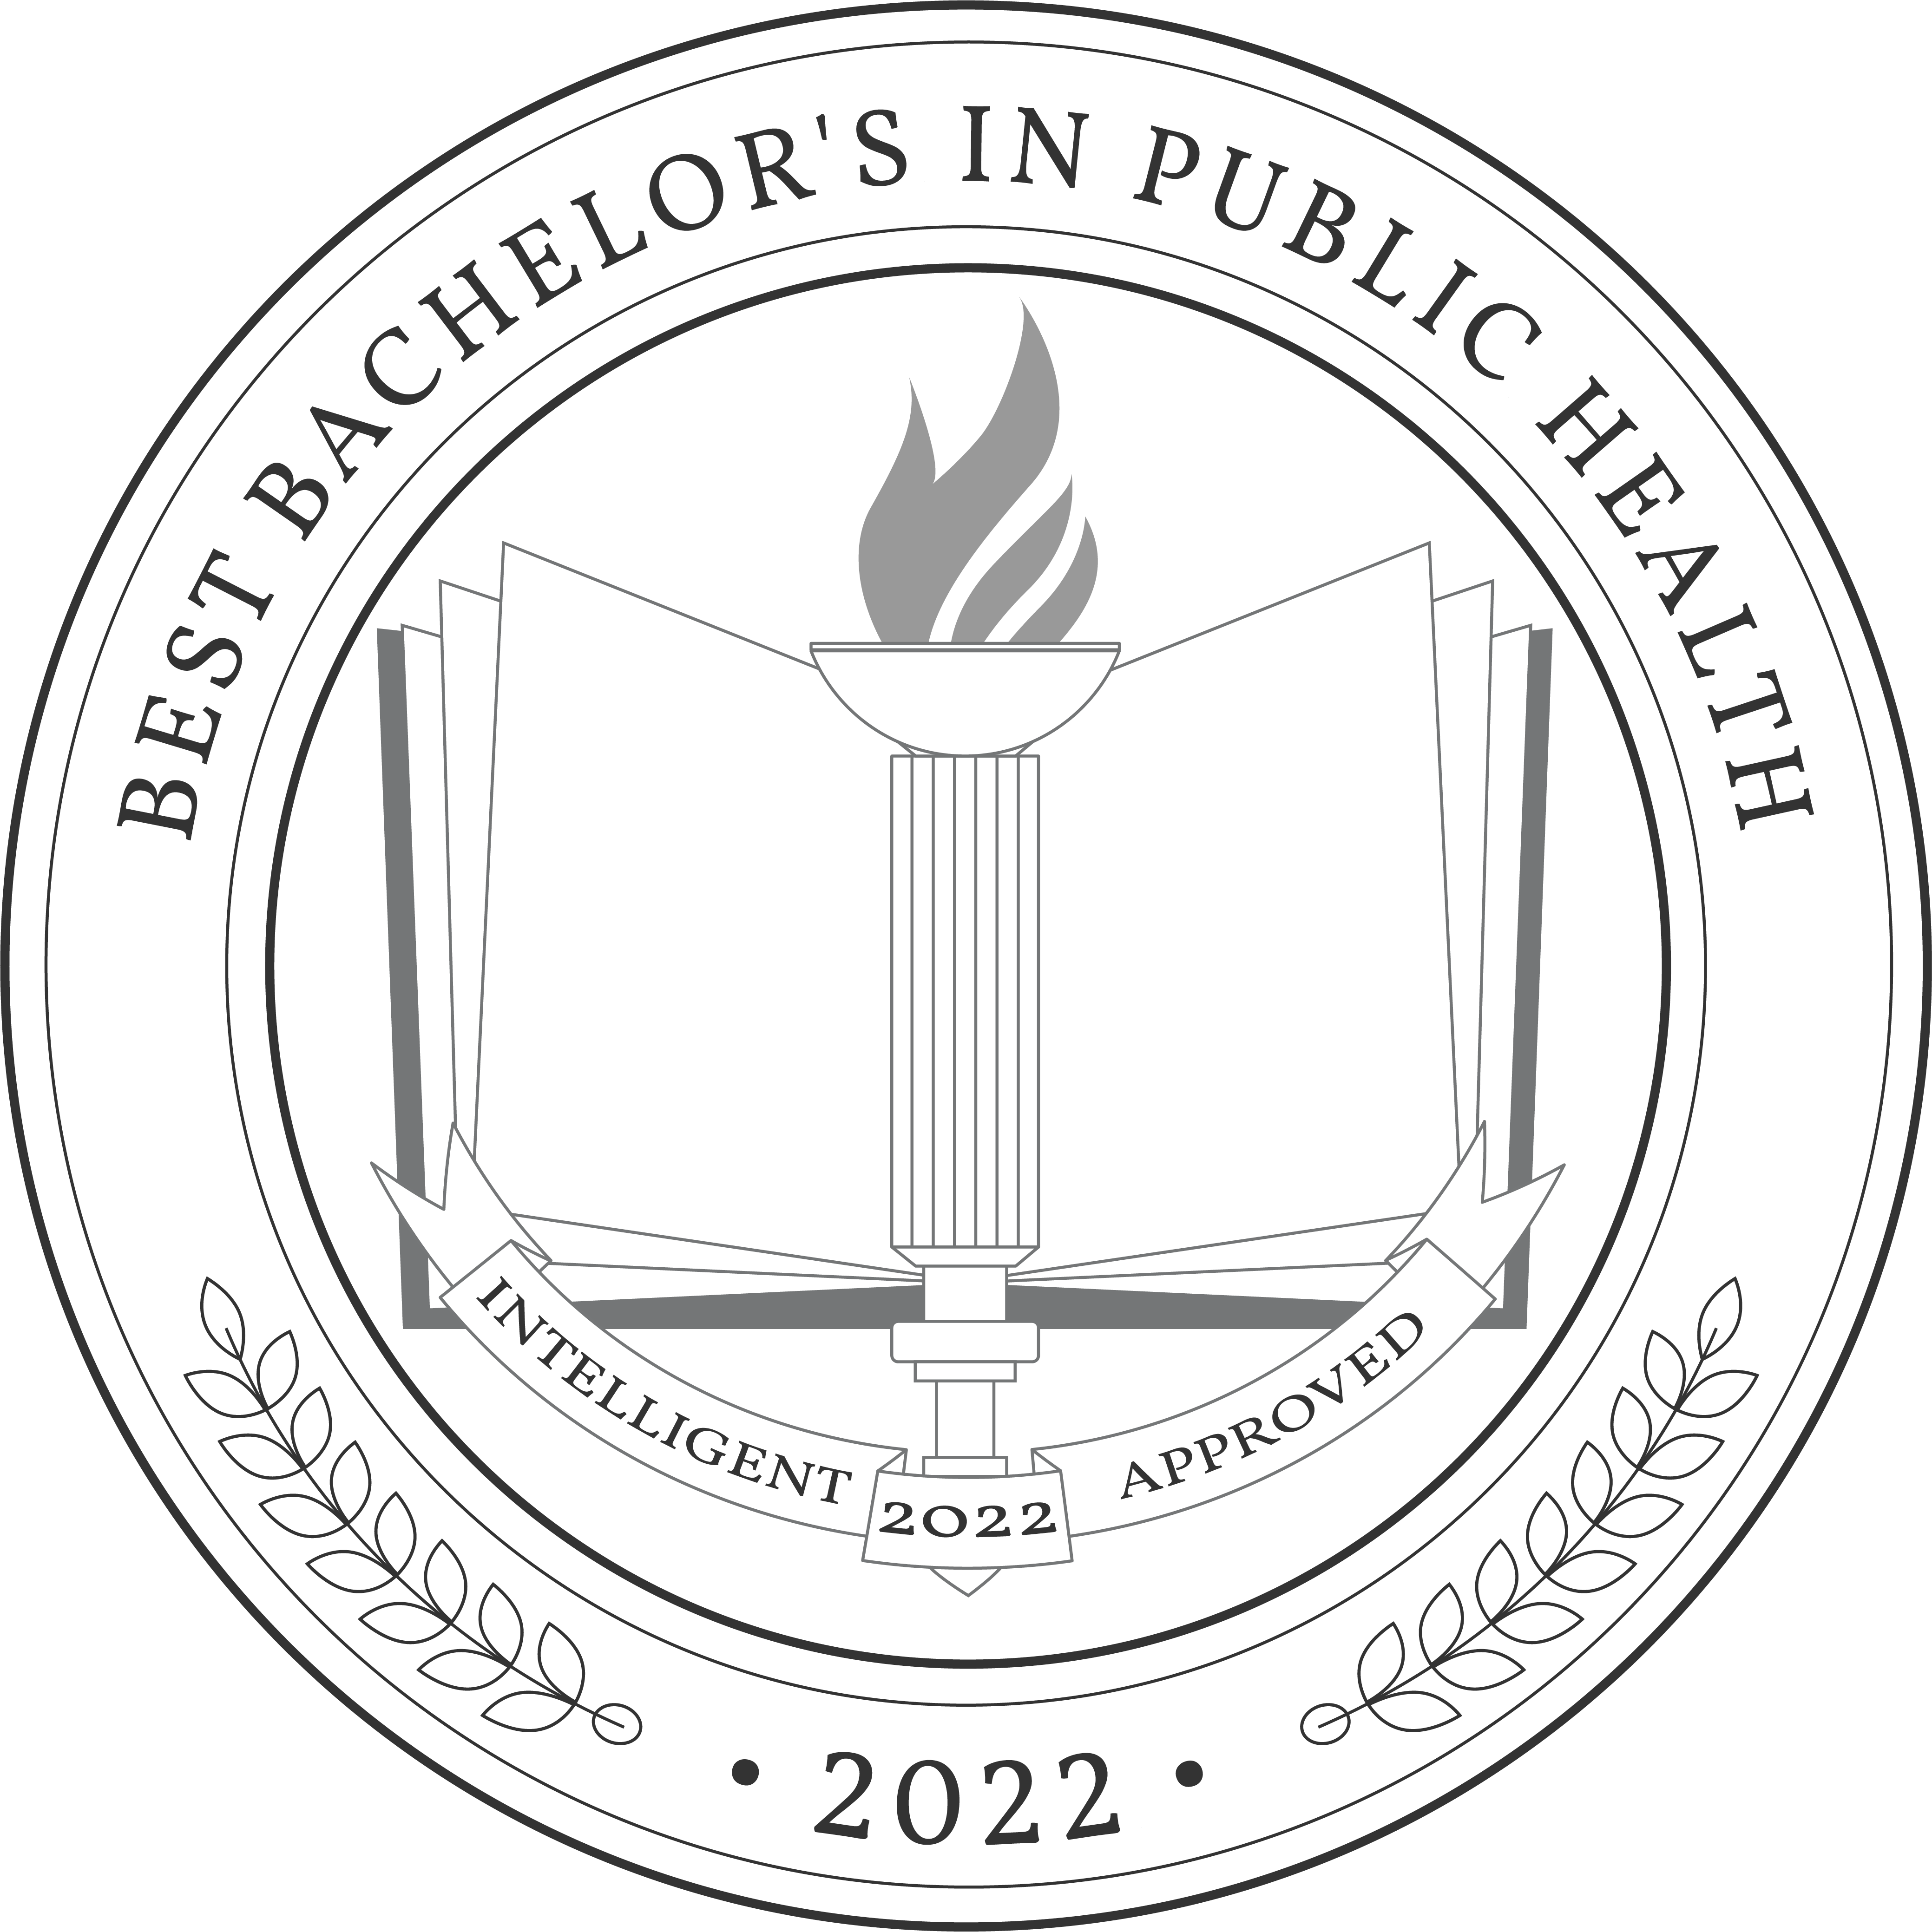 Best Online Bachelors in Public Health Programs Badge